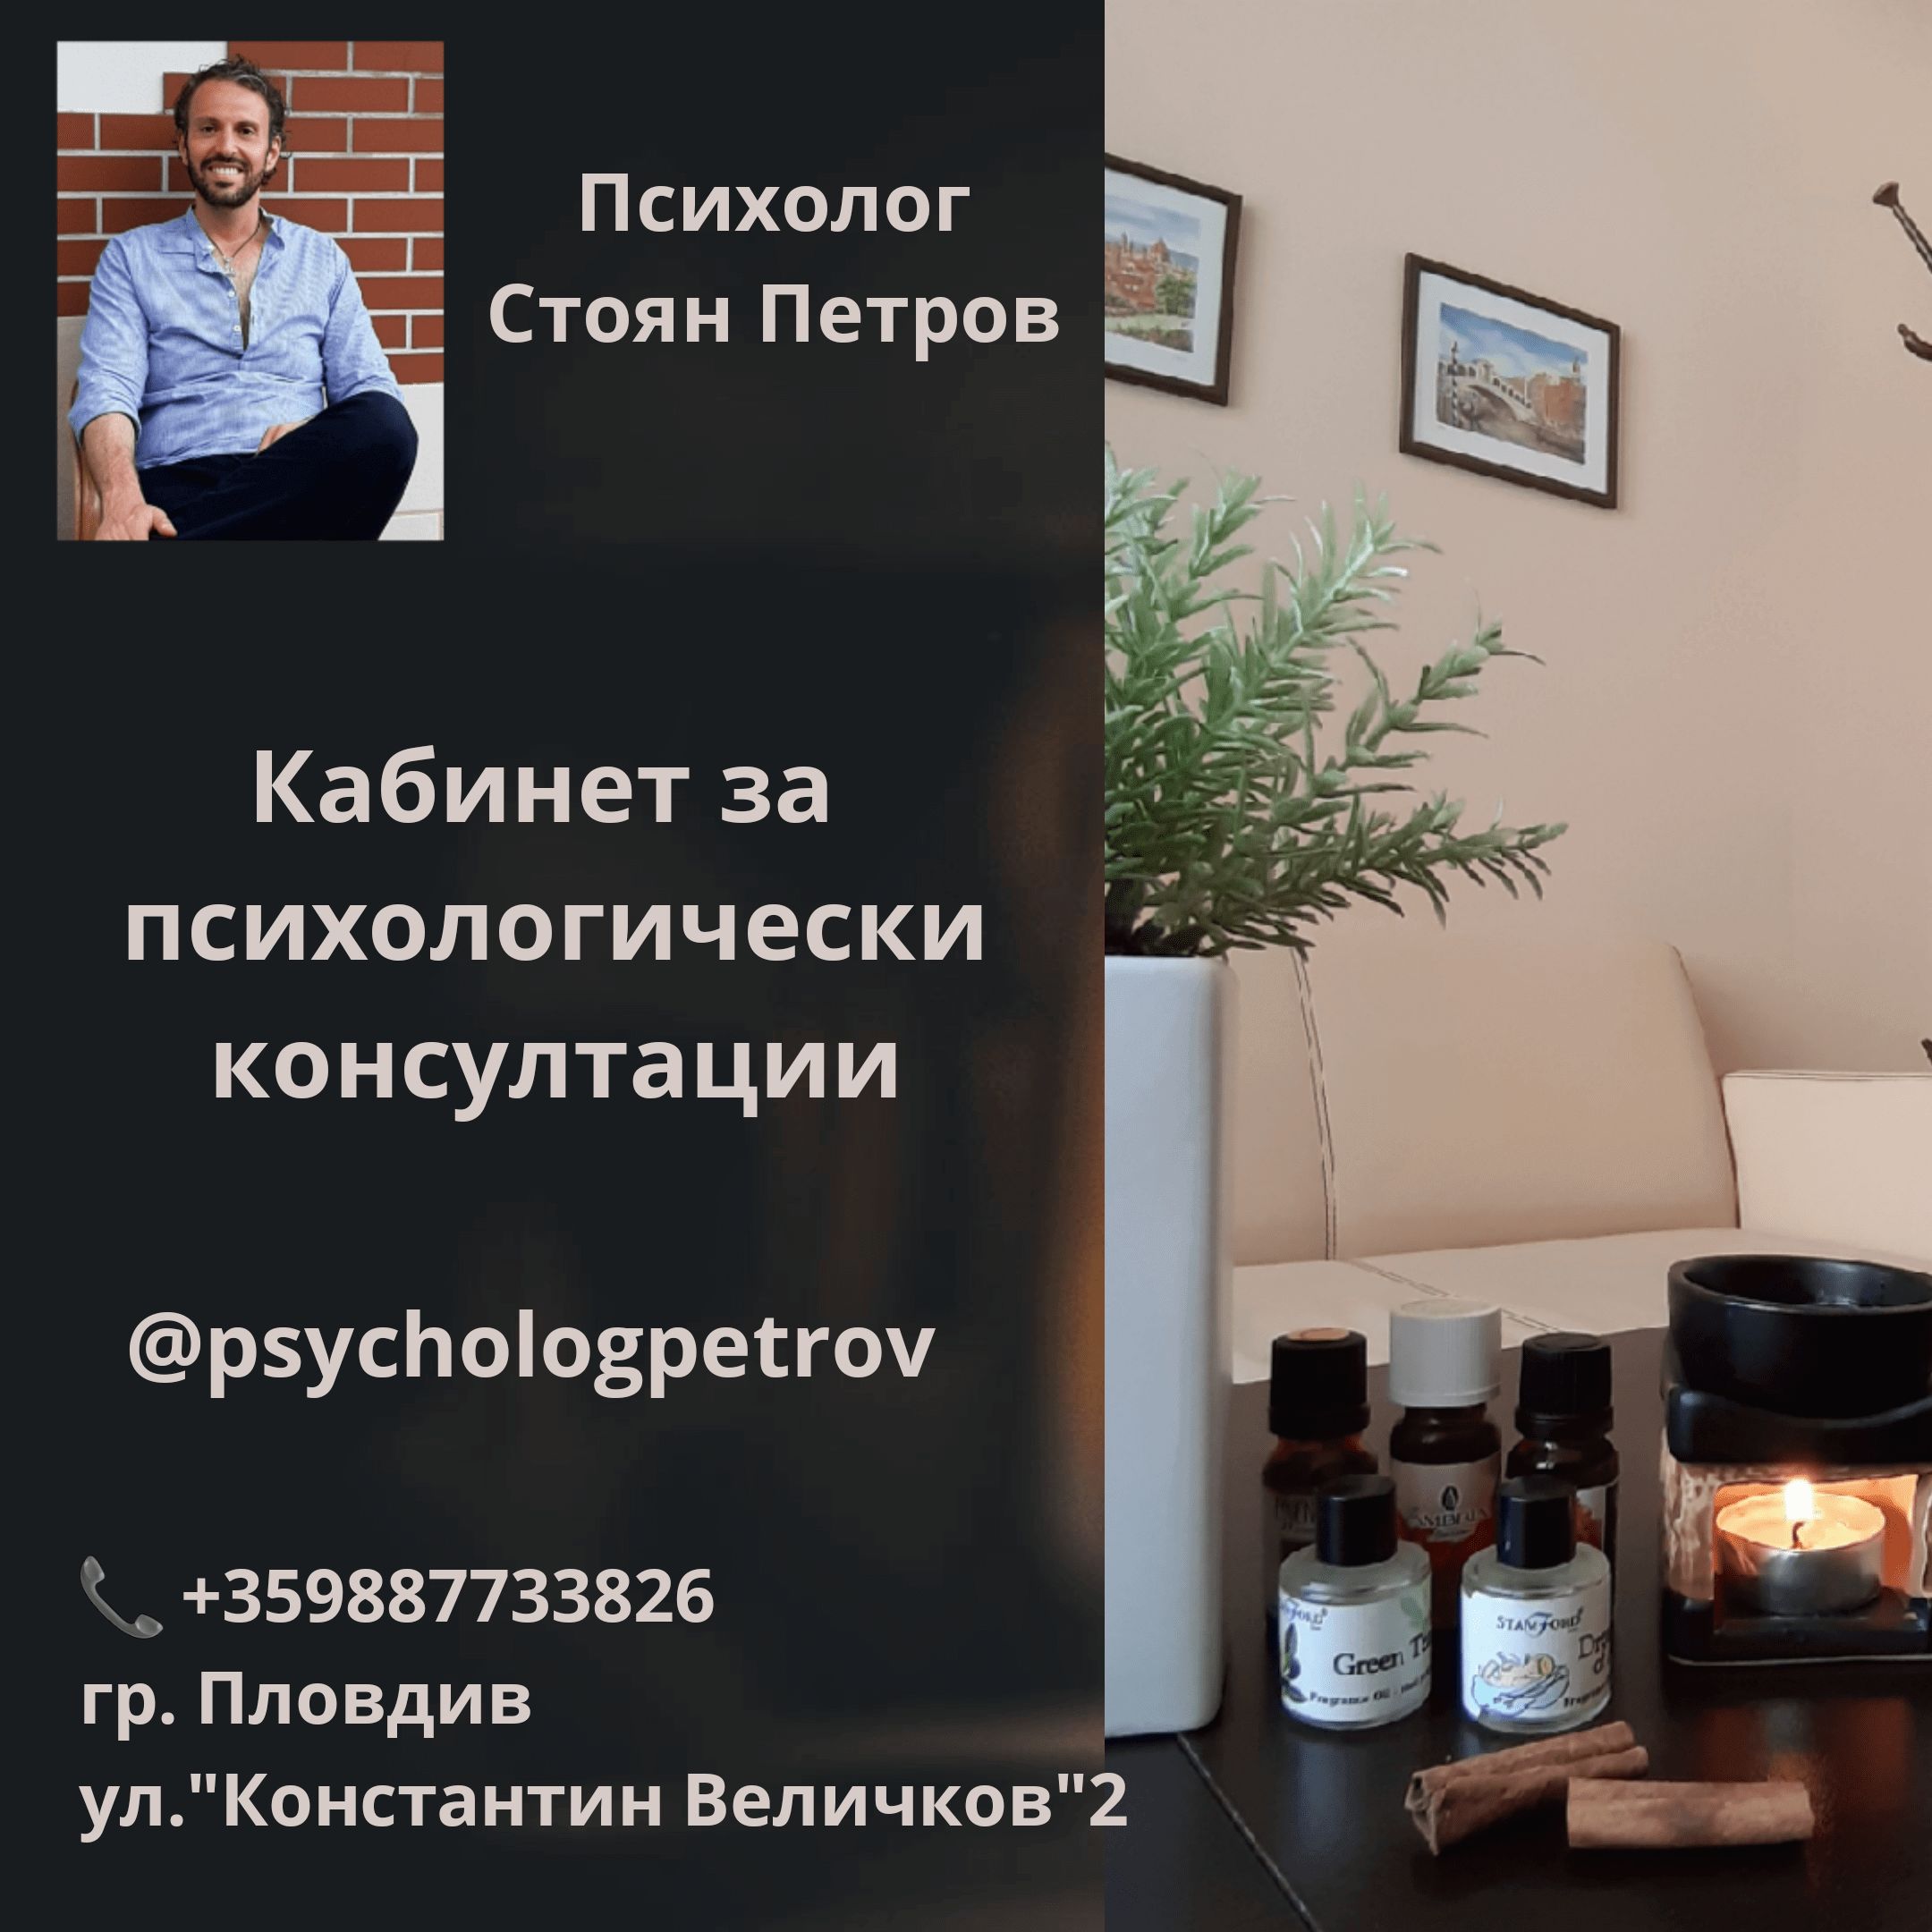 Психолог Стоян Петров – кабинет за психологическо консултиране